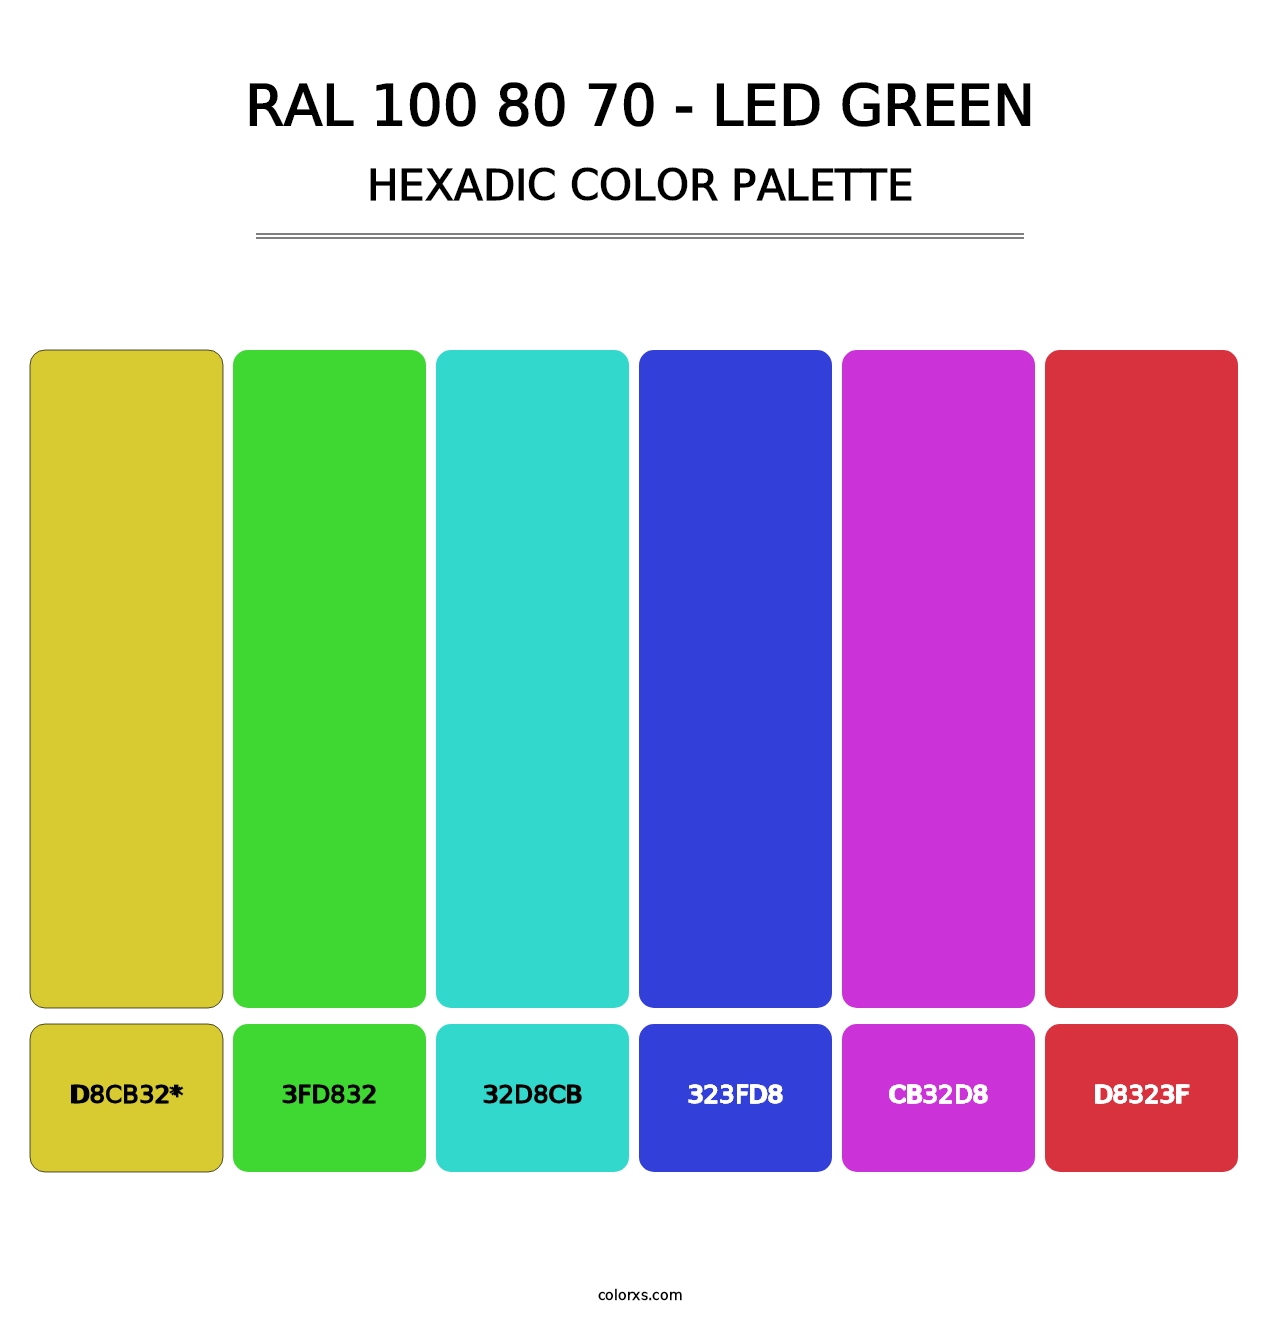 RAL 100 80 70 - LED Green - Hexadic Color Palette